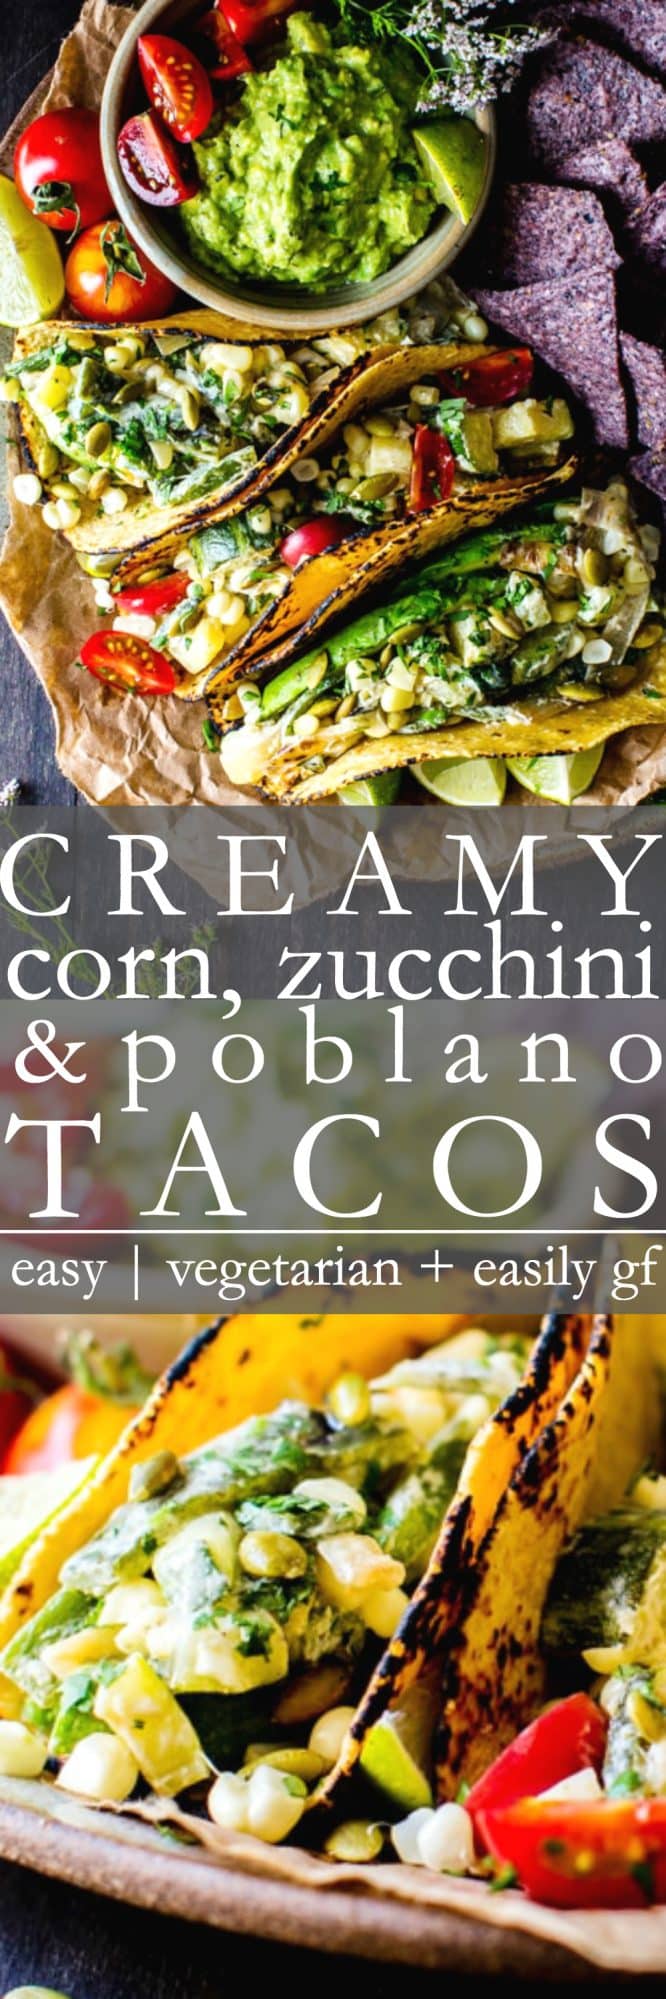 Easy Vegetarian Tacos